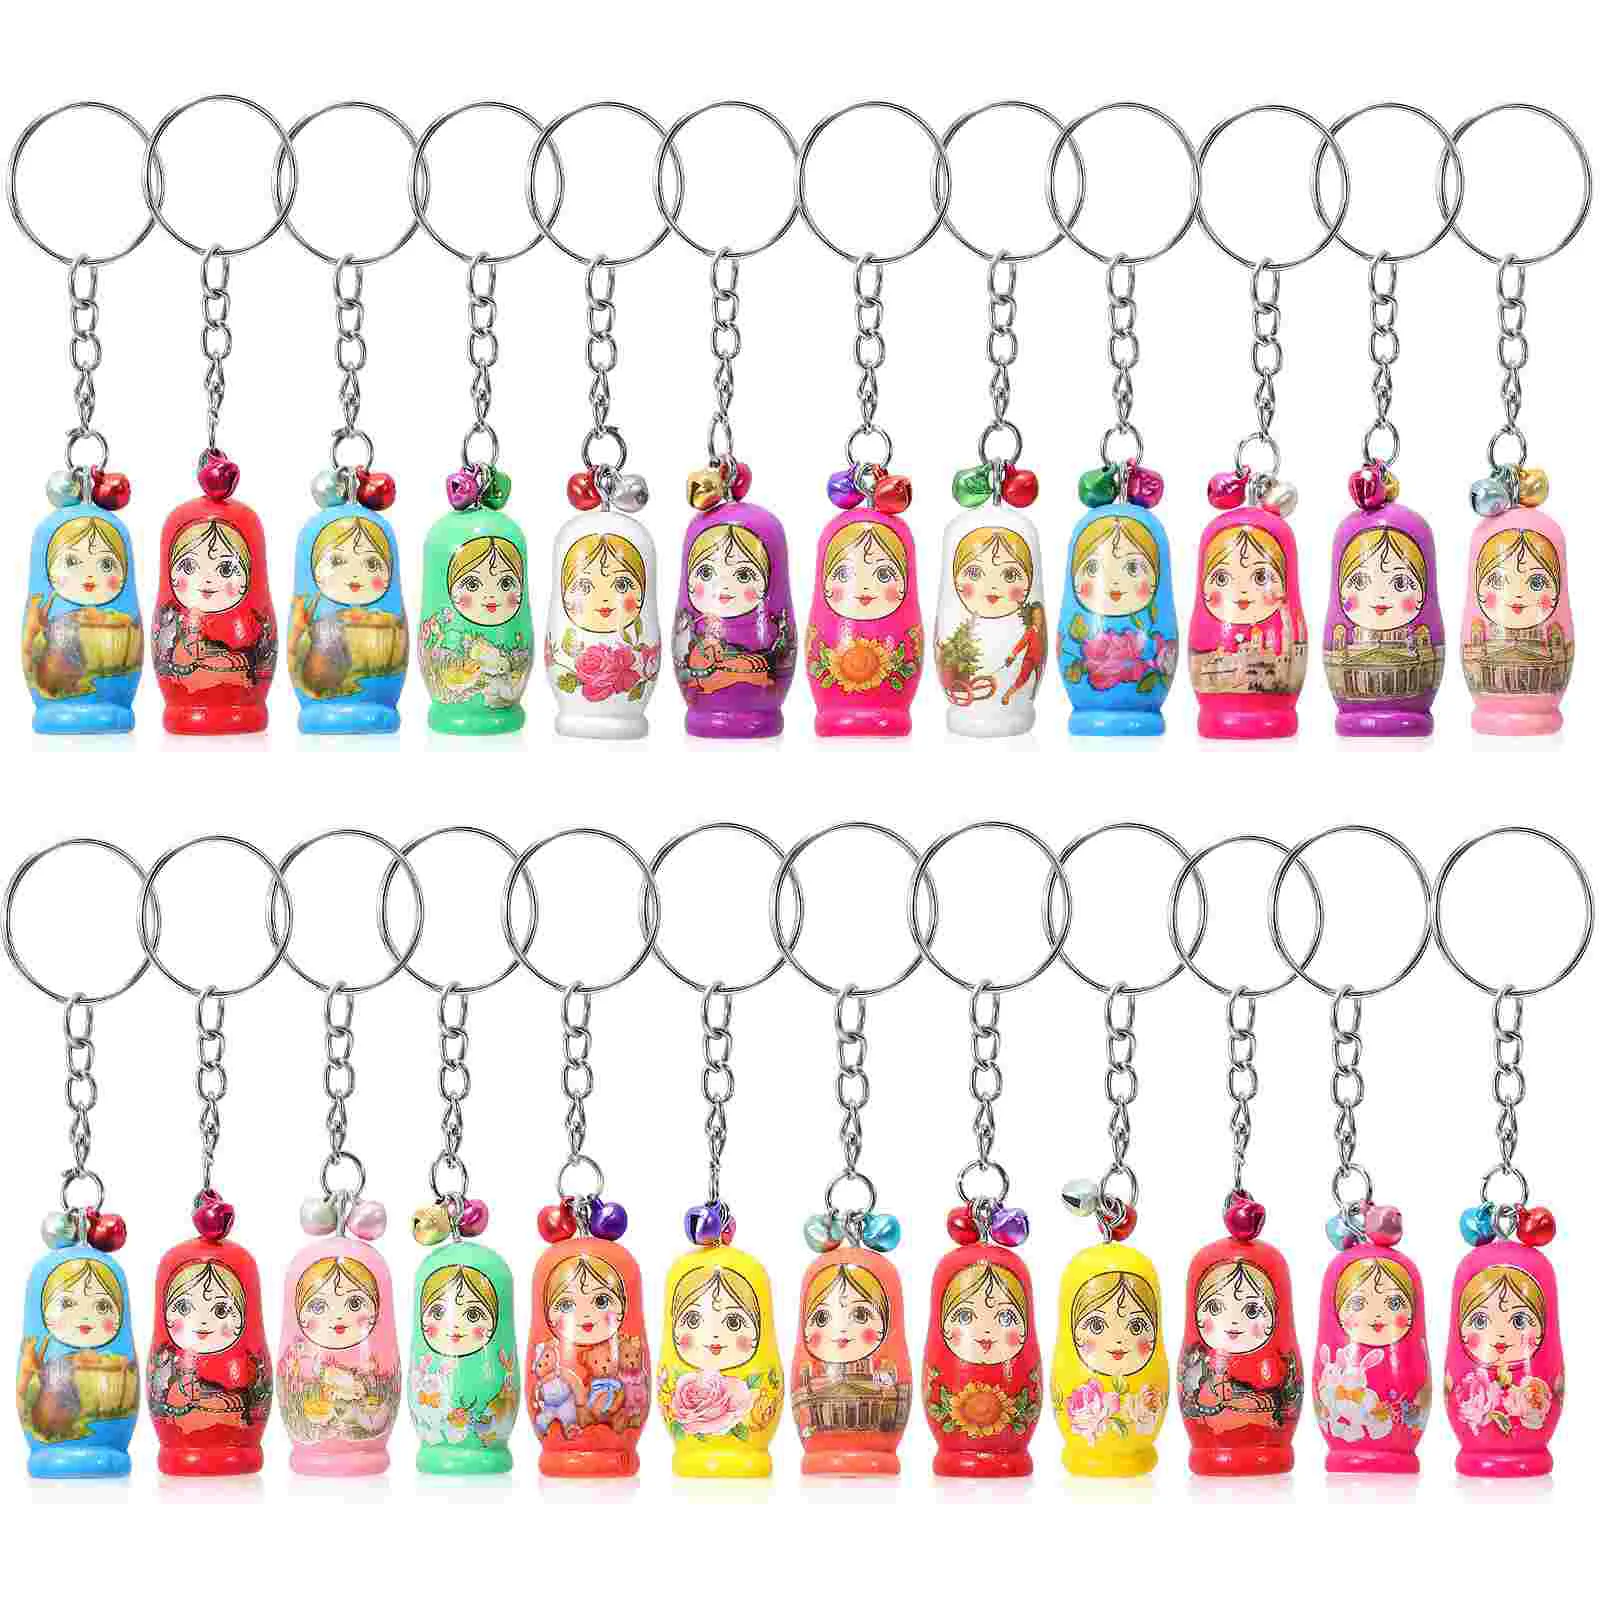 

24 Pcs Key Ring Matryoshka Keychain Cars Toy Small Russian Nesting Dolls Wooden Rings Keychains